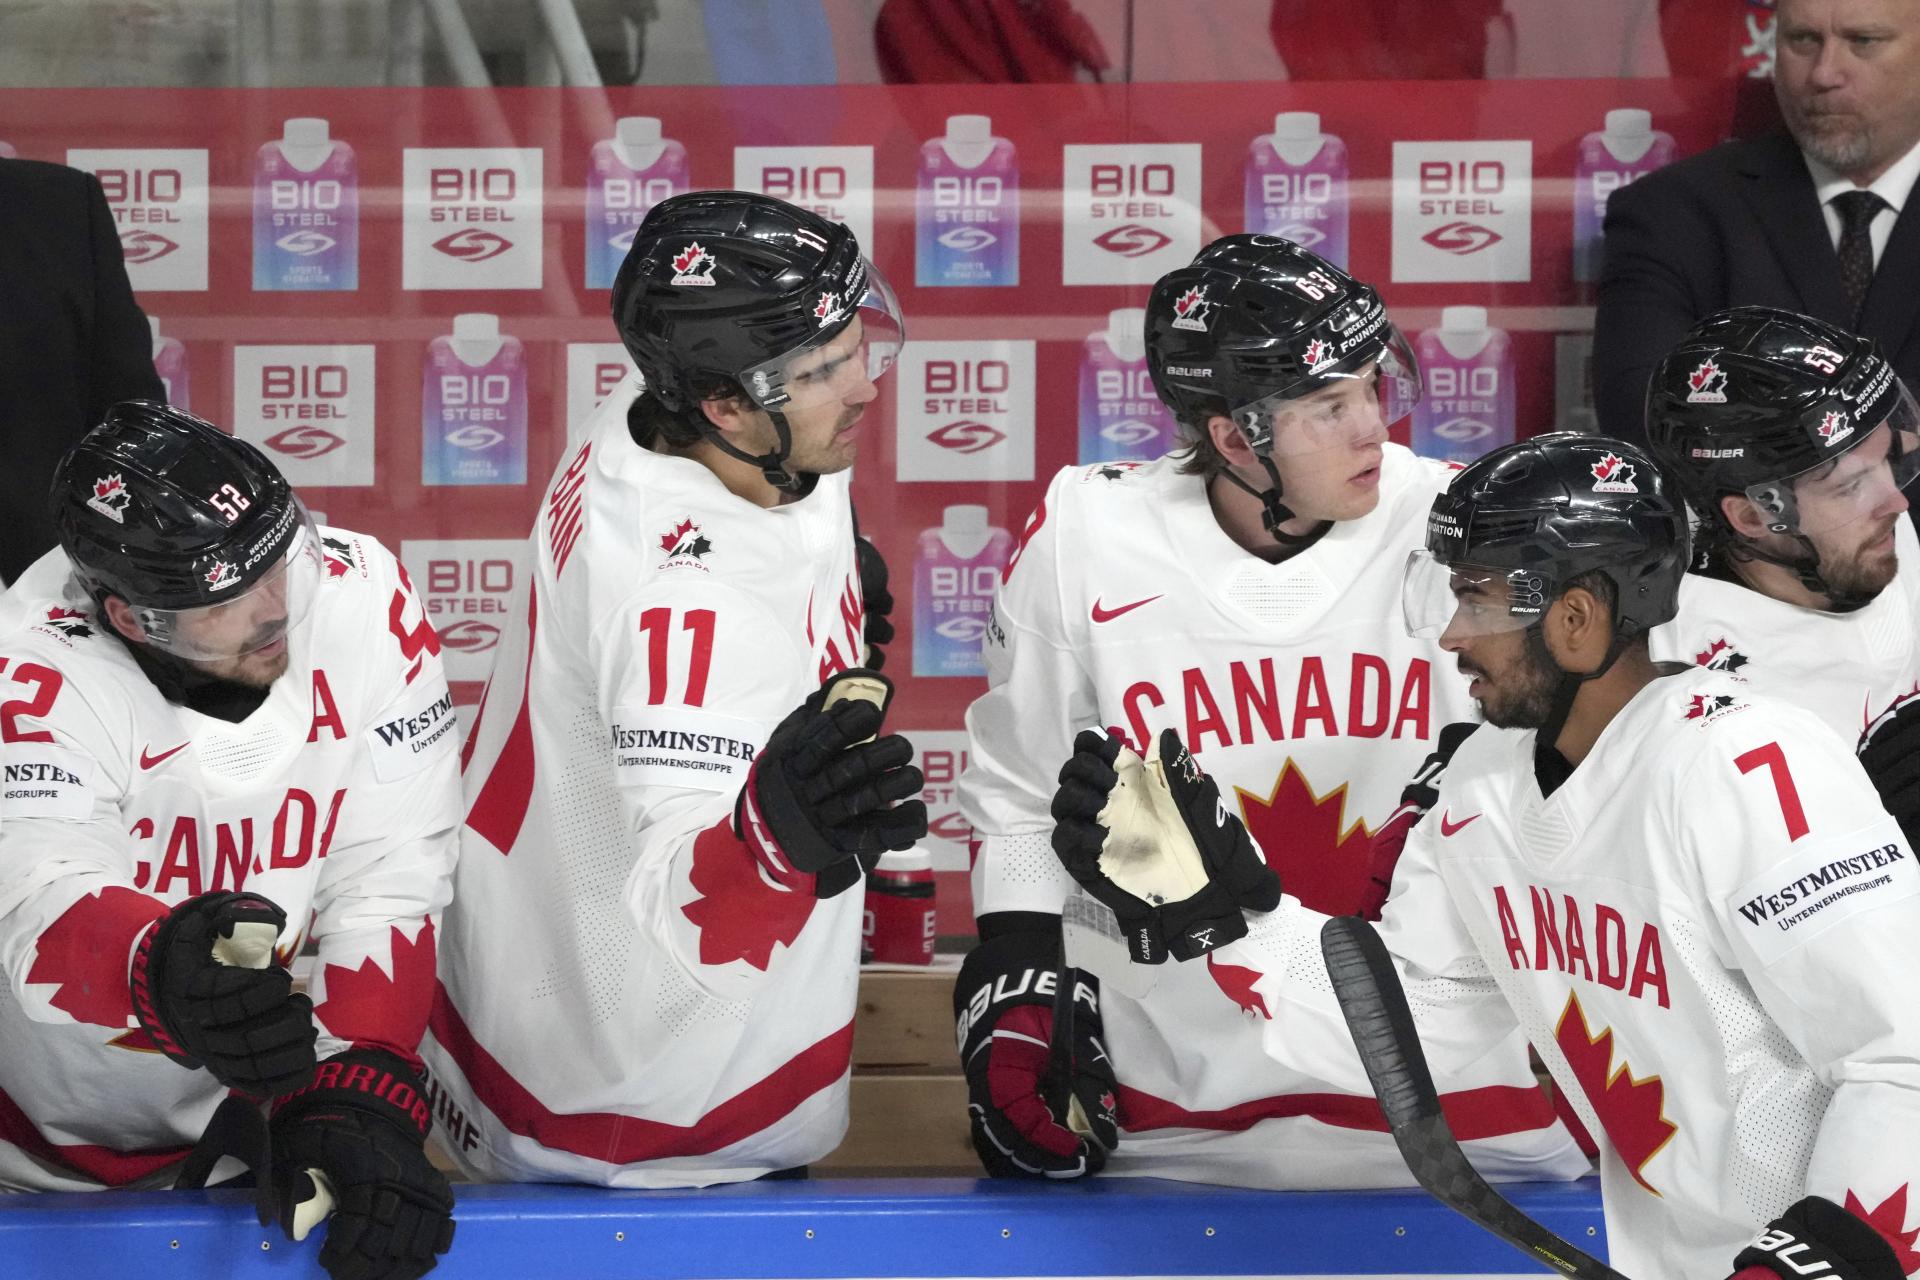 Kanada porazila Slovinsko, favorit v druhej časti tromi gólmi otočil vývoj zápasu